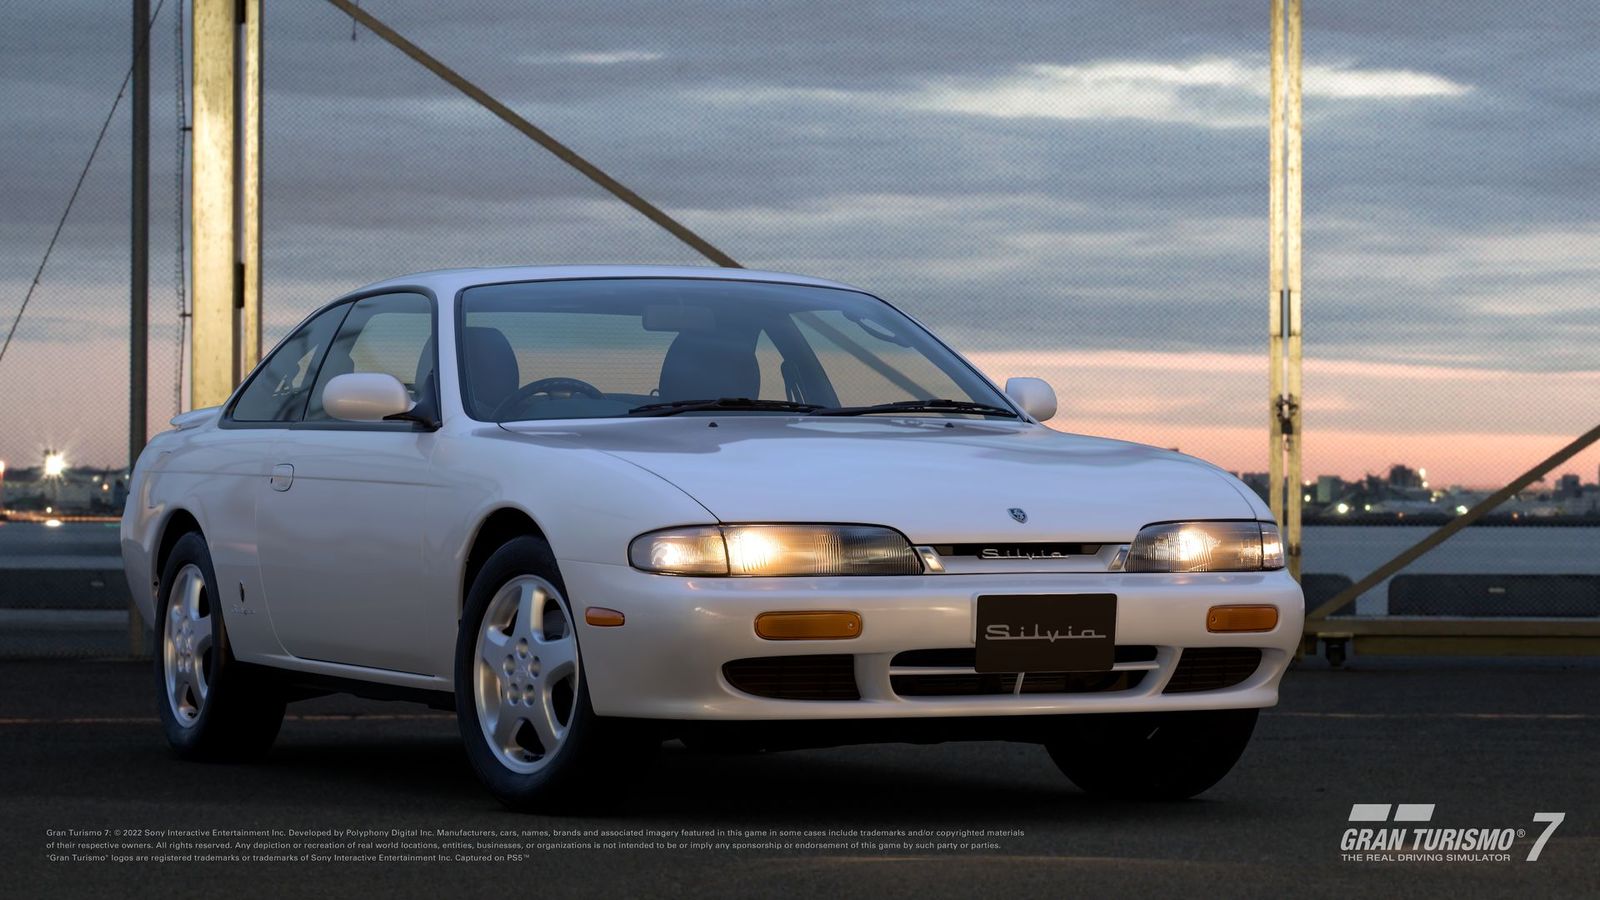 Gran Turismo 7 update 1.23 Nissan Silvia K's Type S (S14) ’94